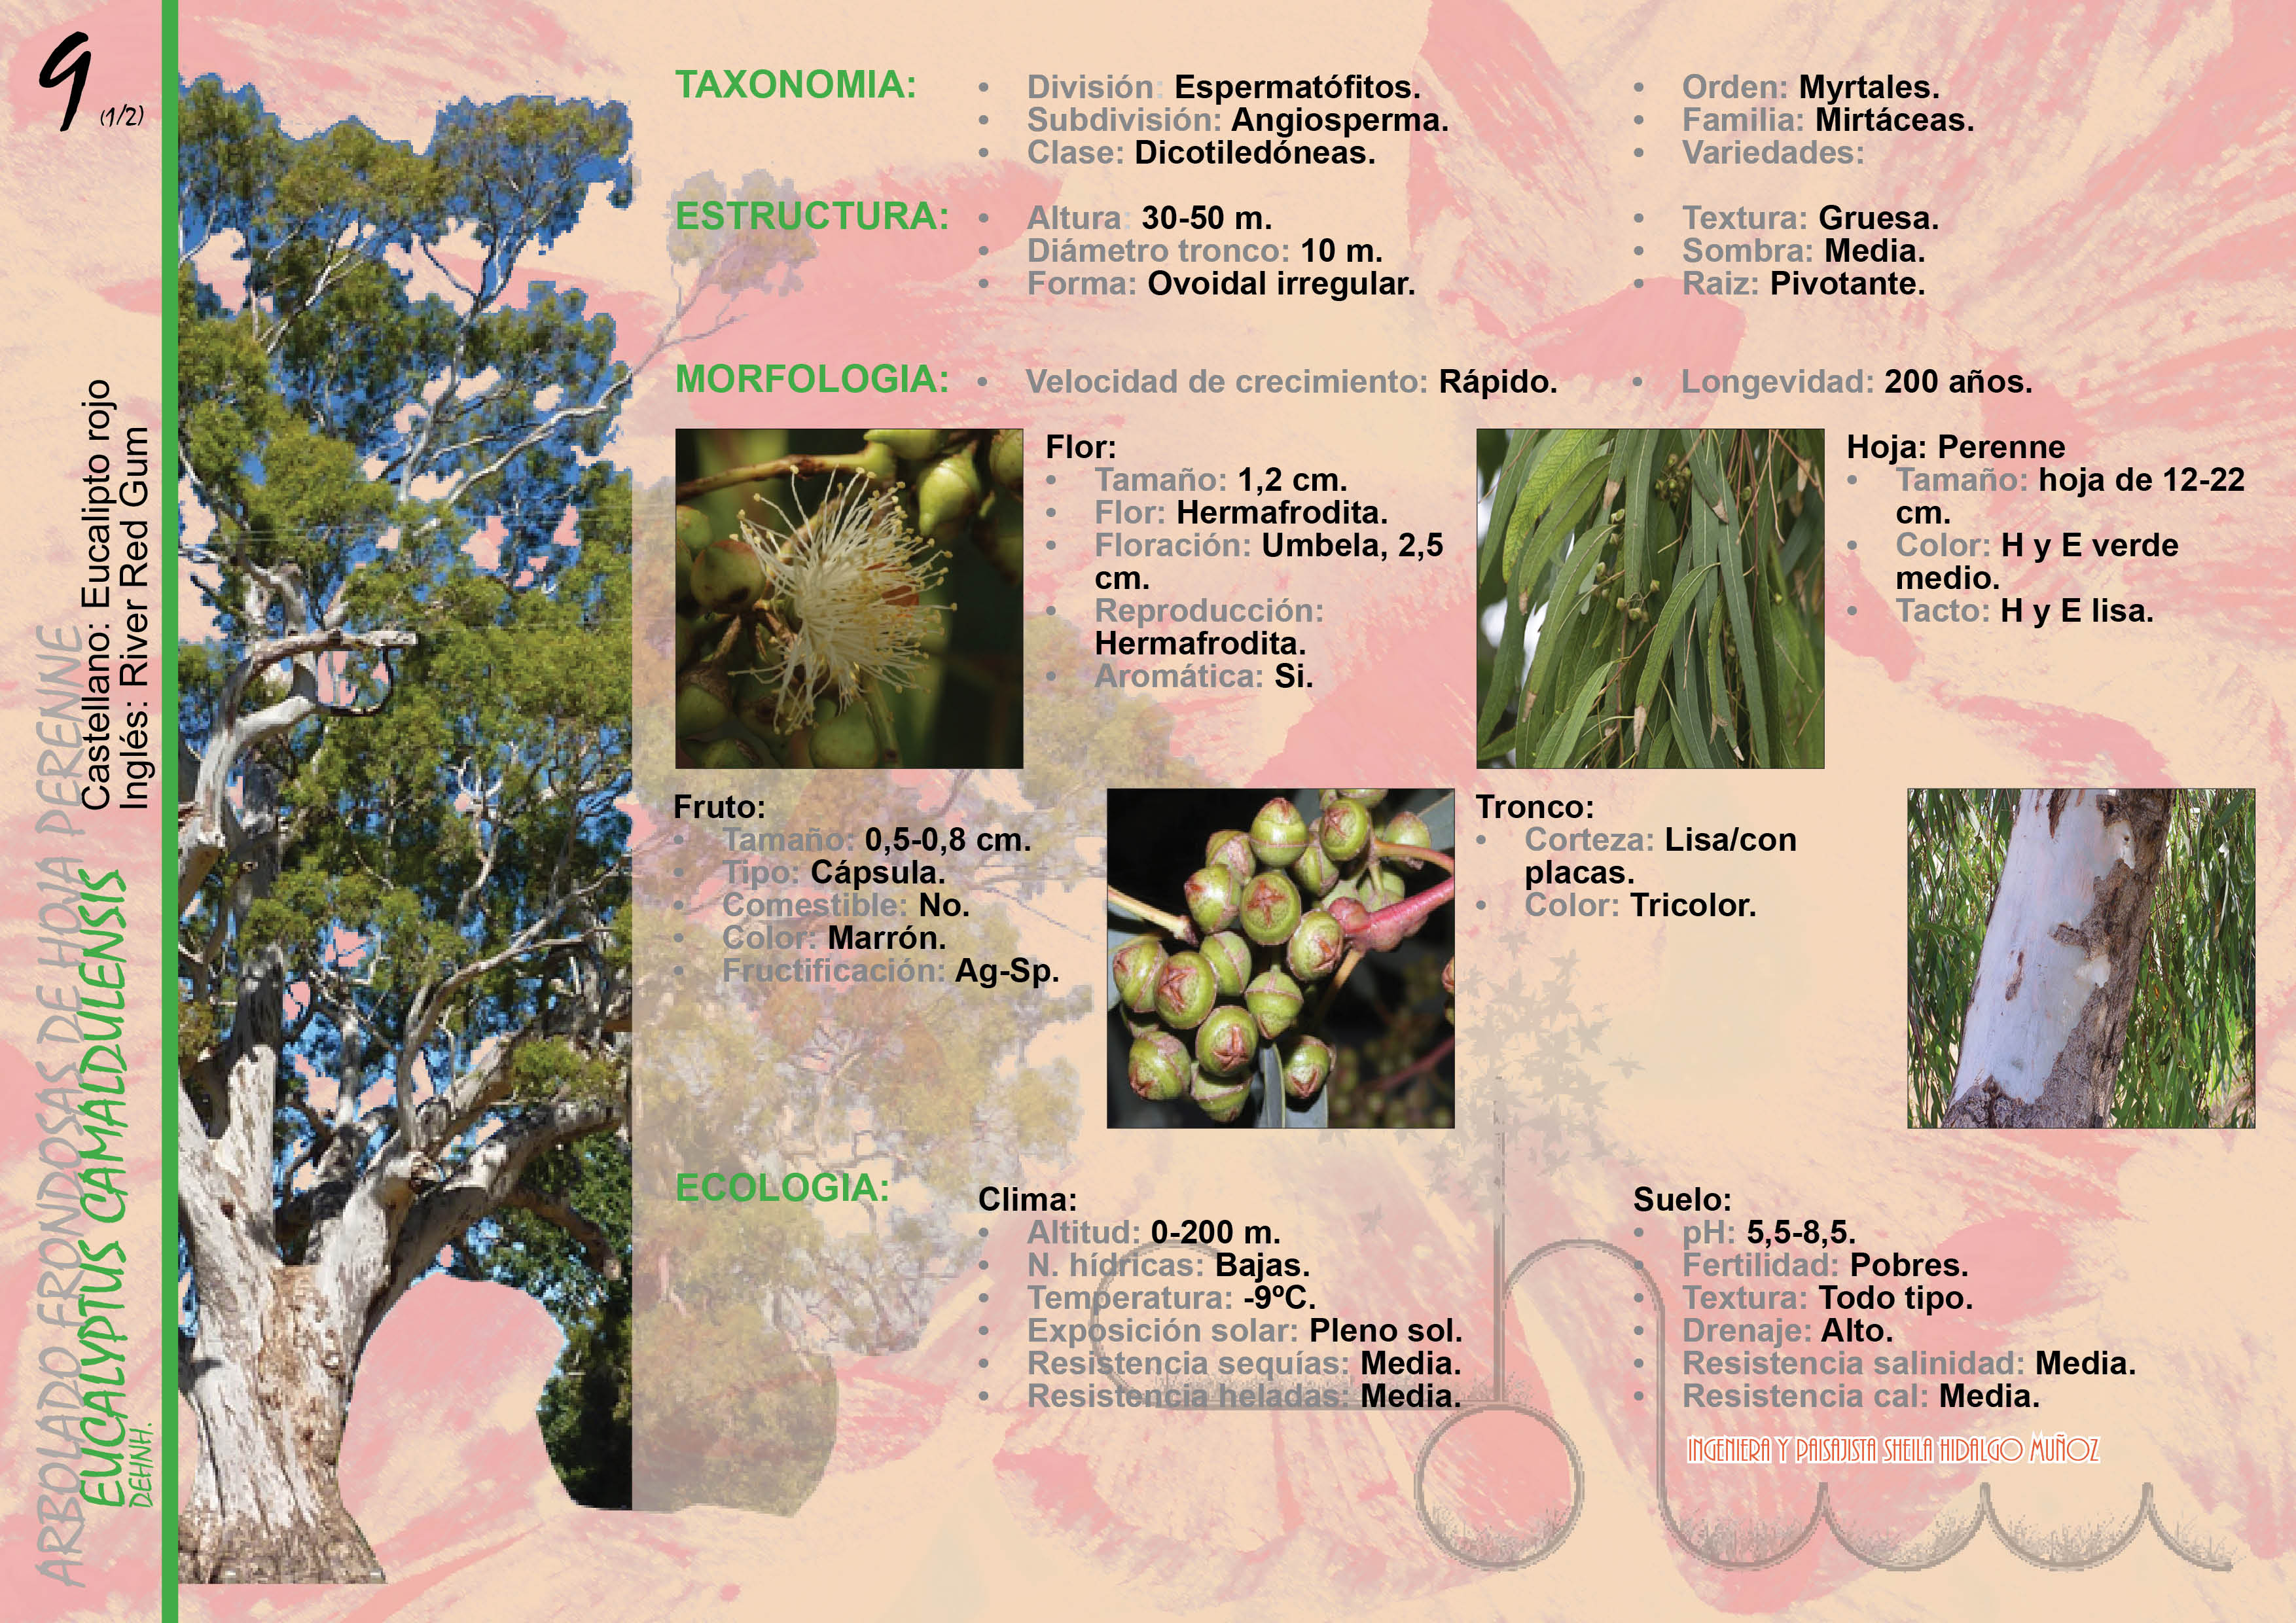 deshonesto Inactividad En otras palabras Sheila Hidalgo Muñoz on Twitter: "Ficha botánica: Eucapyltus camaldulensis,  ó eucalipto rojo. https://t.co/2Dh54rpgCu #botanica #paisajismo #jardín  http://t.co/vez9JDJUbz" / Twitter